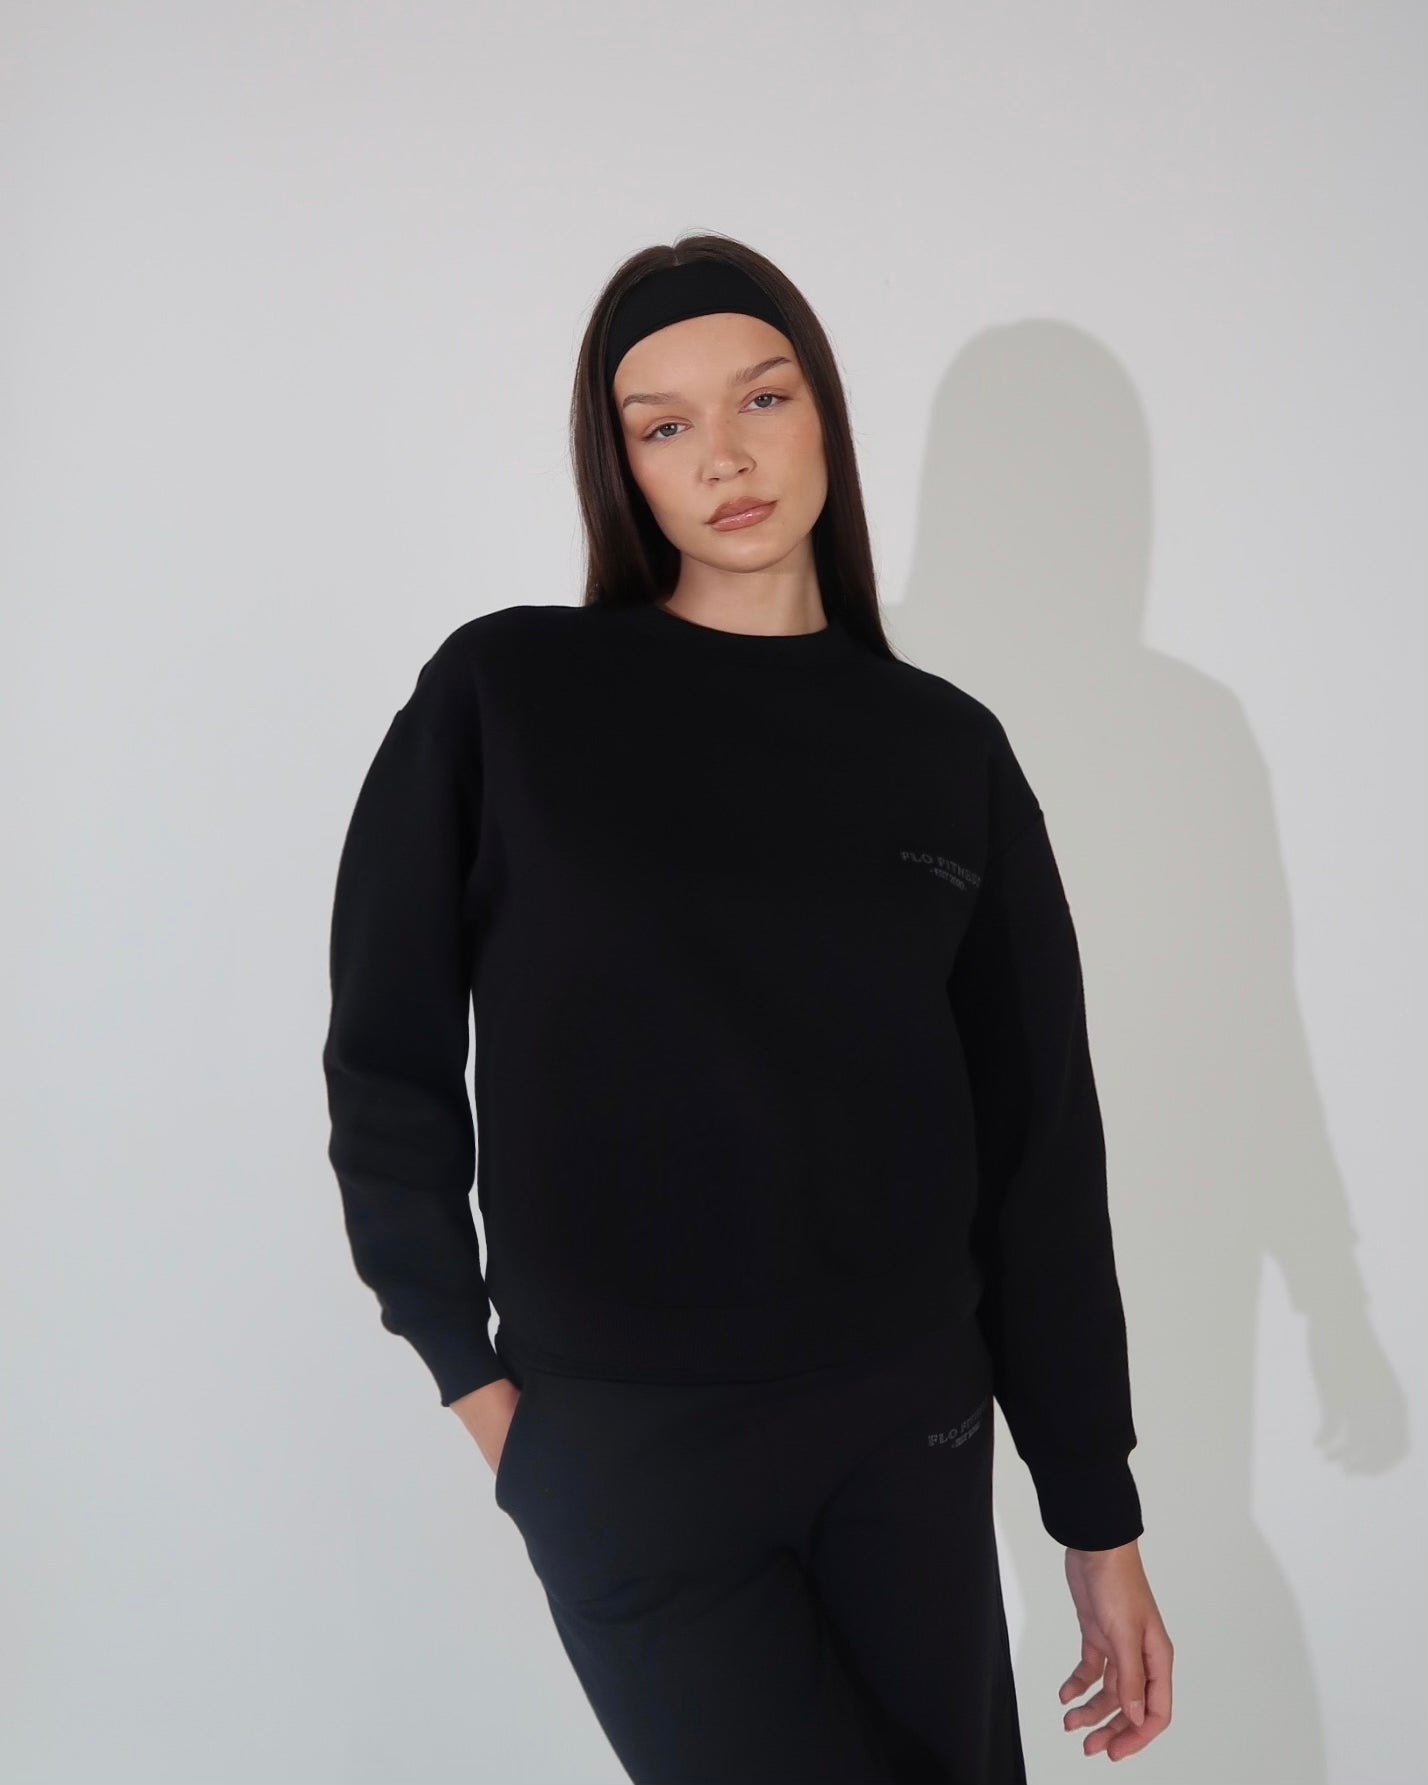 Sweatshirt - Black